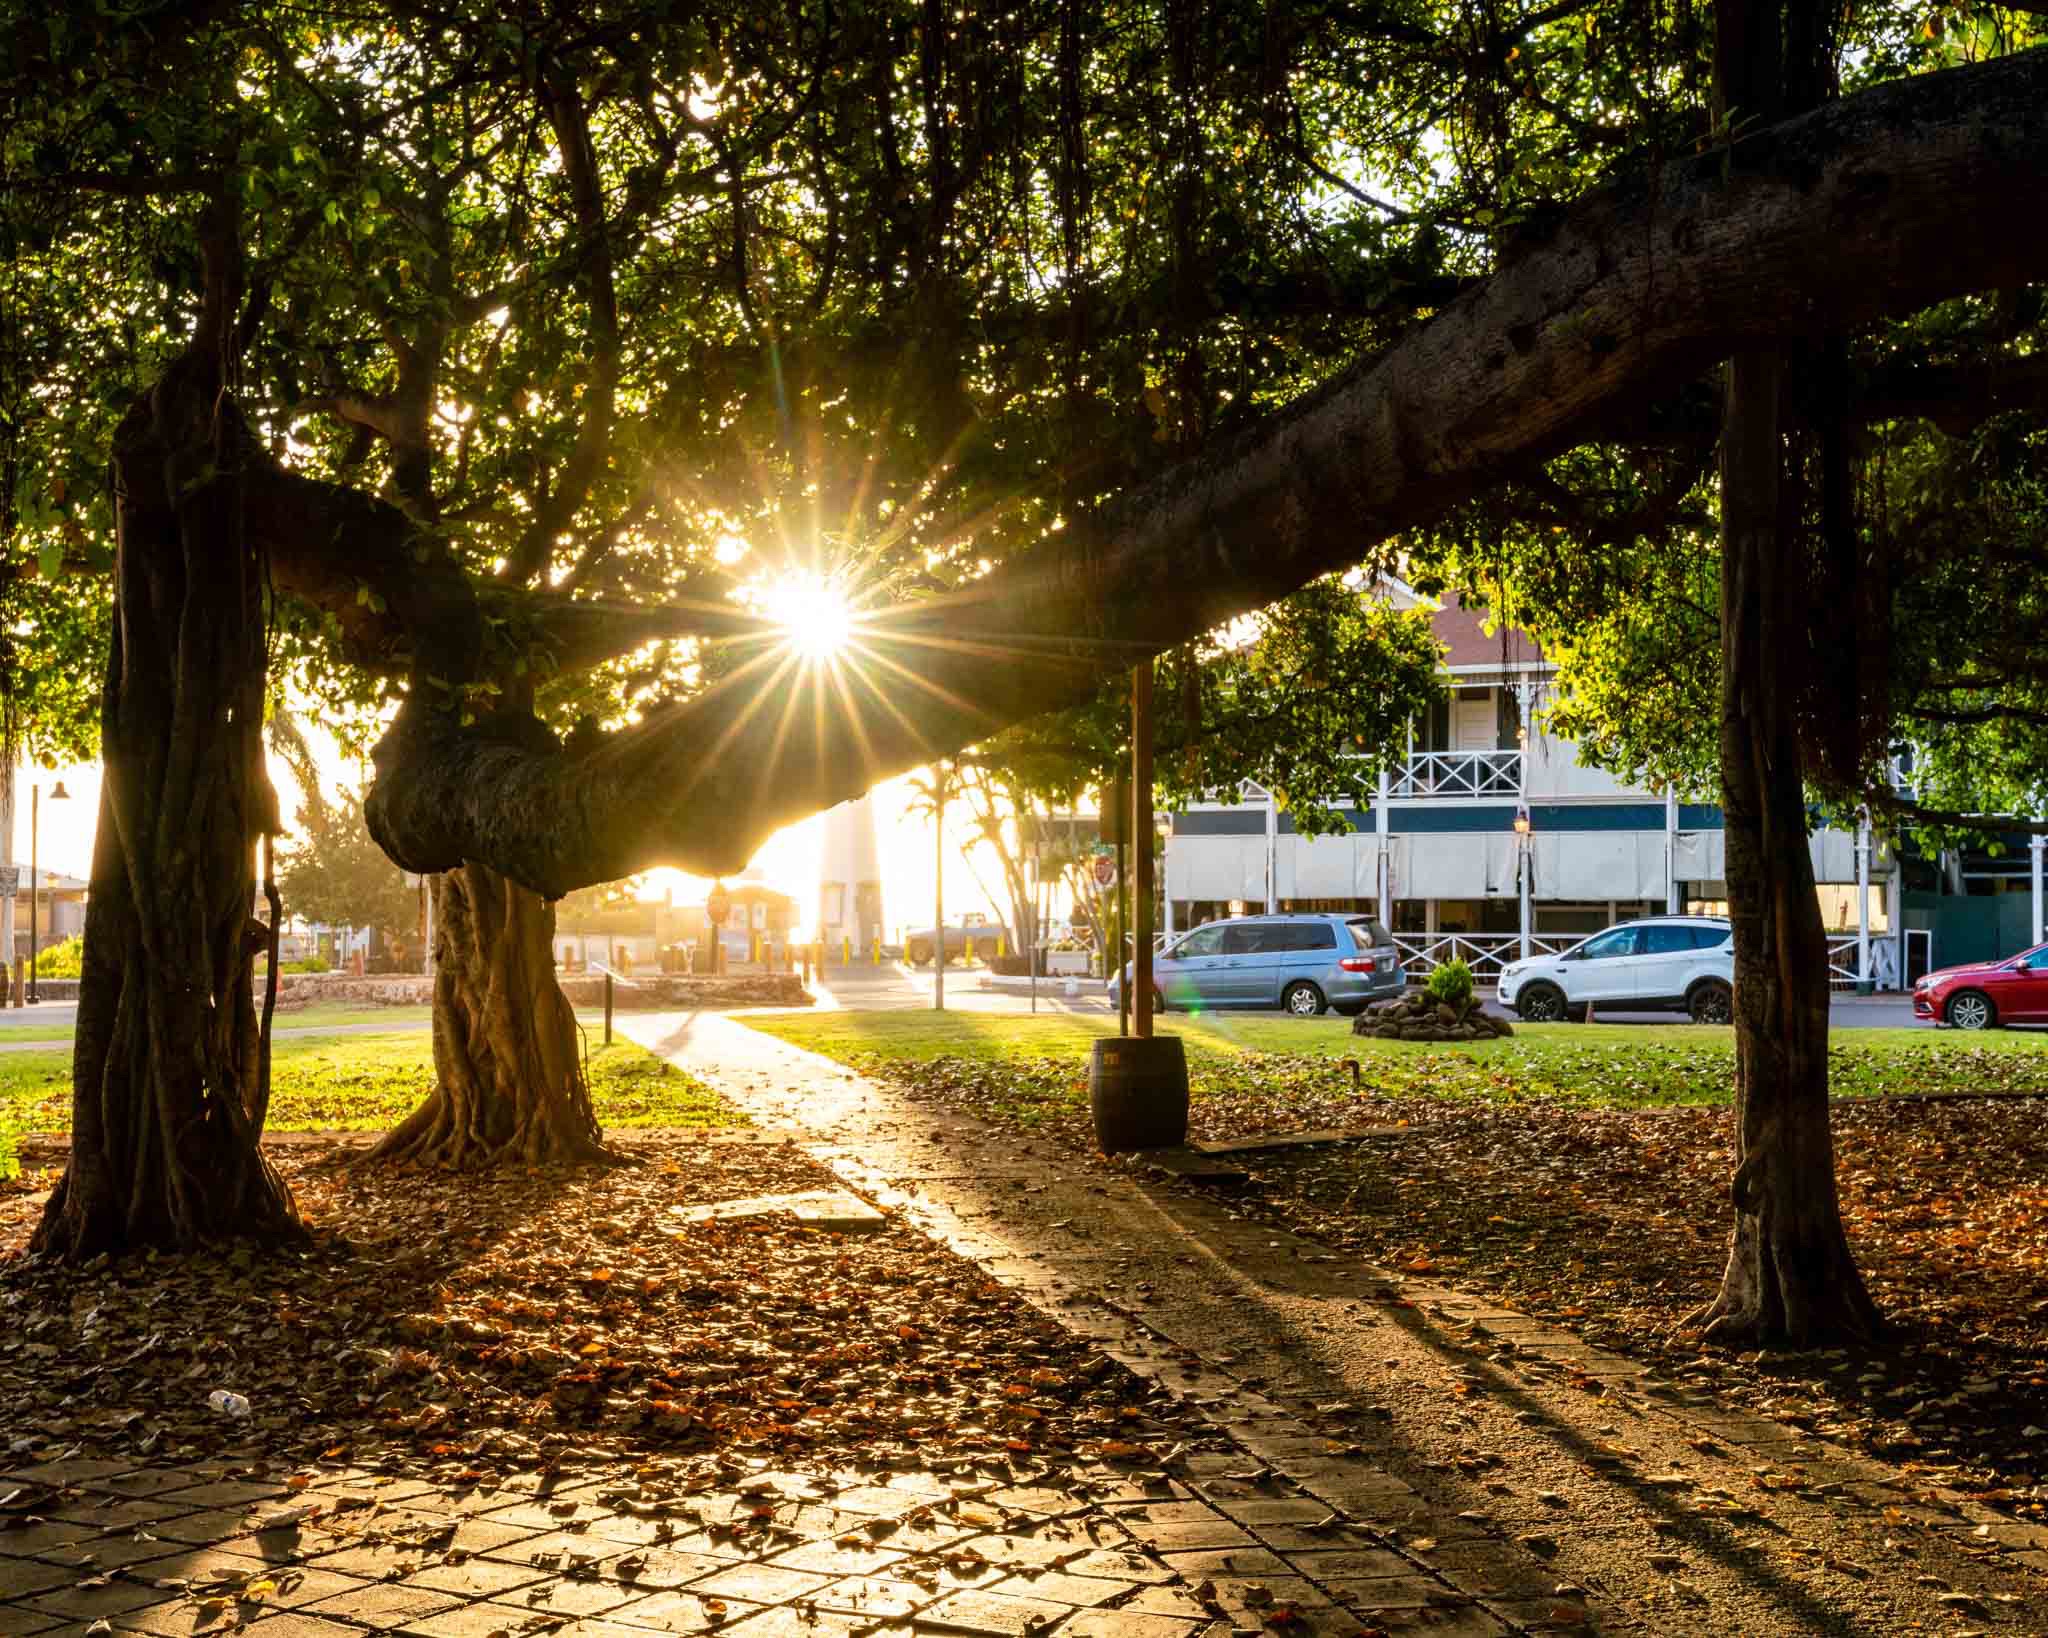 sun shining through trees and a sidewalk